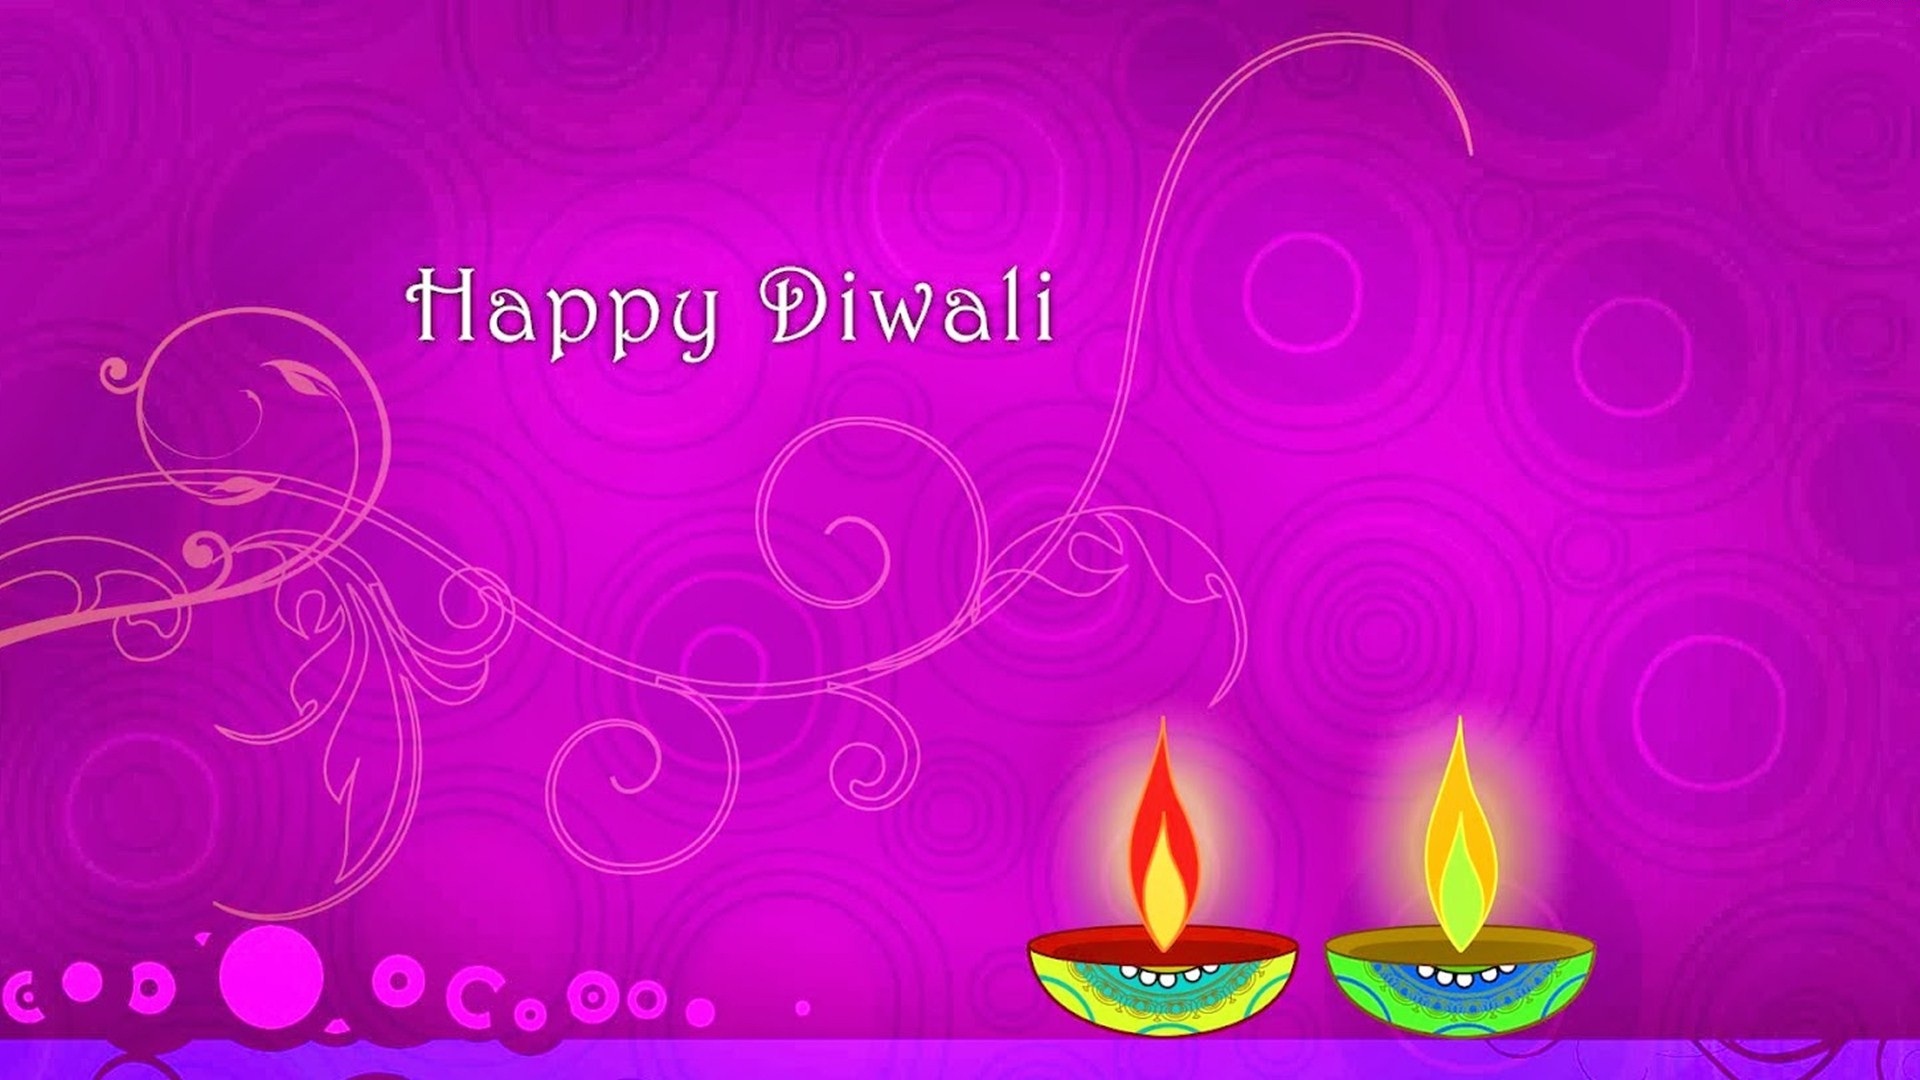 Deepavali Images Free Download For Pc - Happy Diwali 2018 Hindi - 1920x1080  Wallpaper 